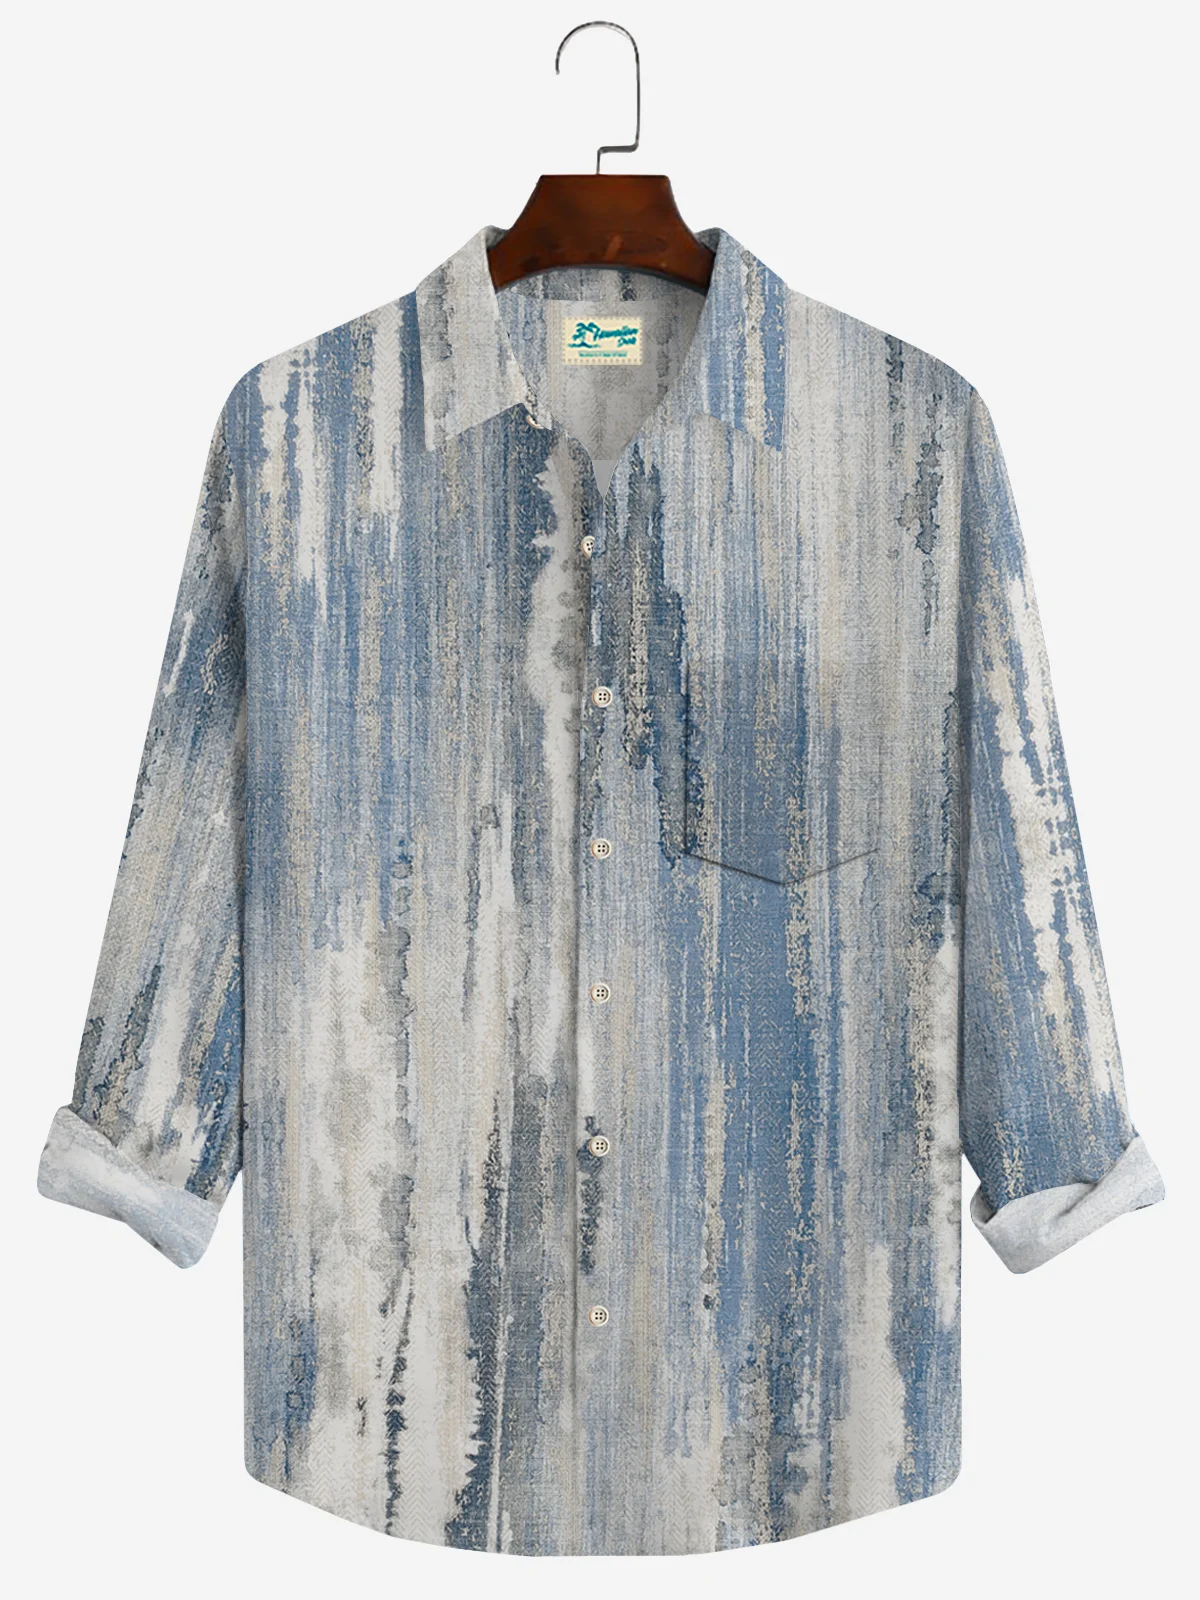 Royaura 50’s Vintage Textured Light Blue Men's Casual Long Sleeve Shirts Stretch Aloha Camp Pocket Wrinkle Free Seersucker Shirts